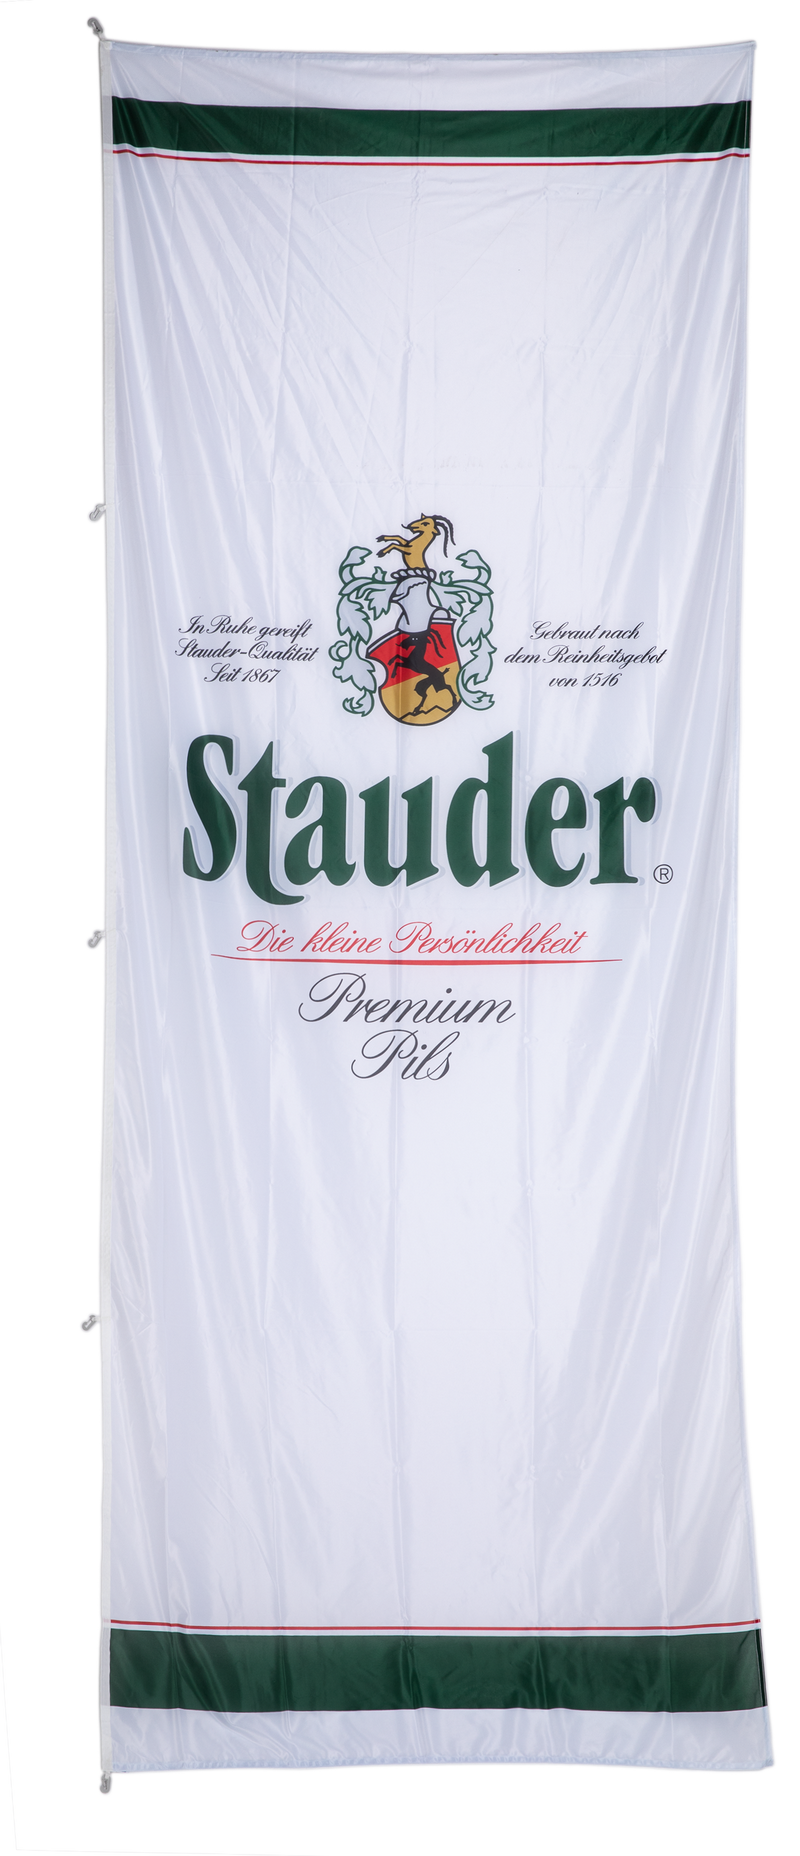 Stauder 
Flagge